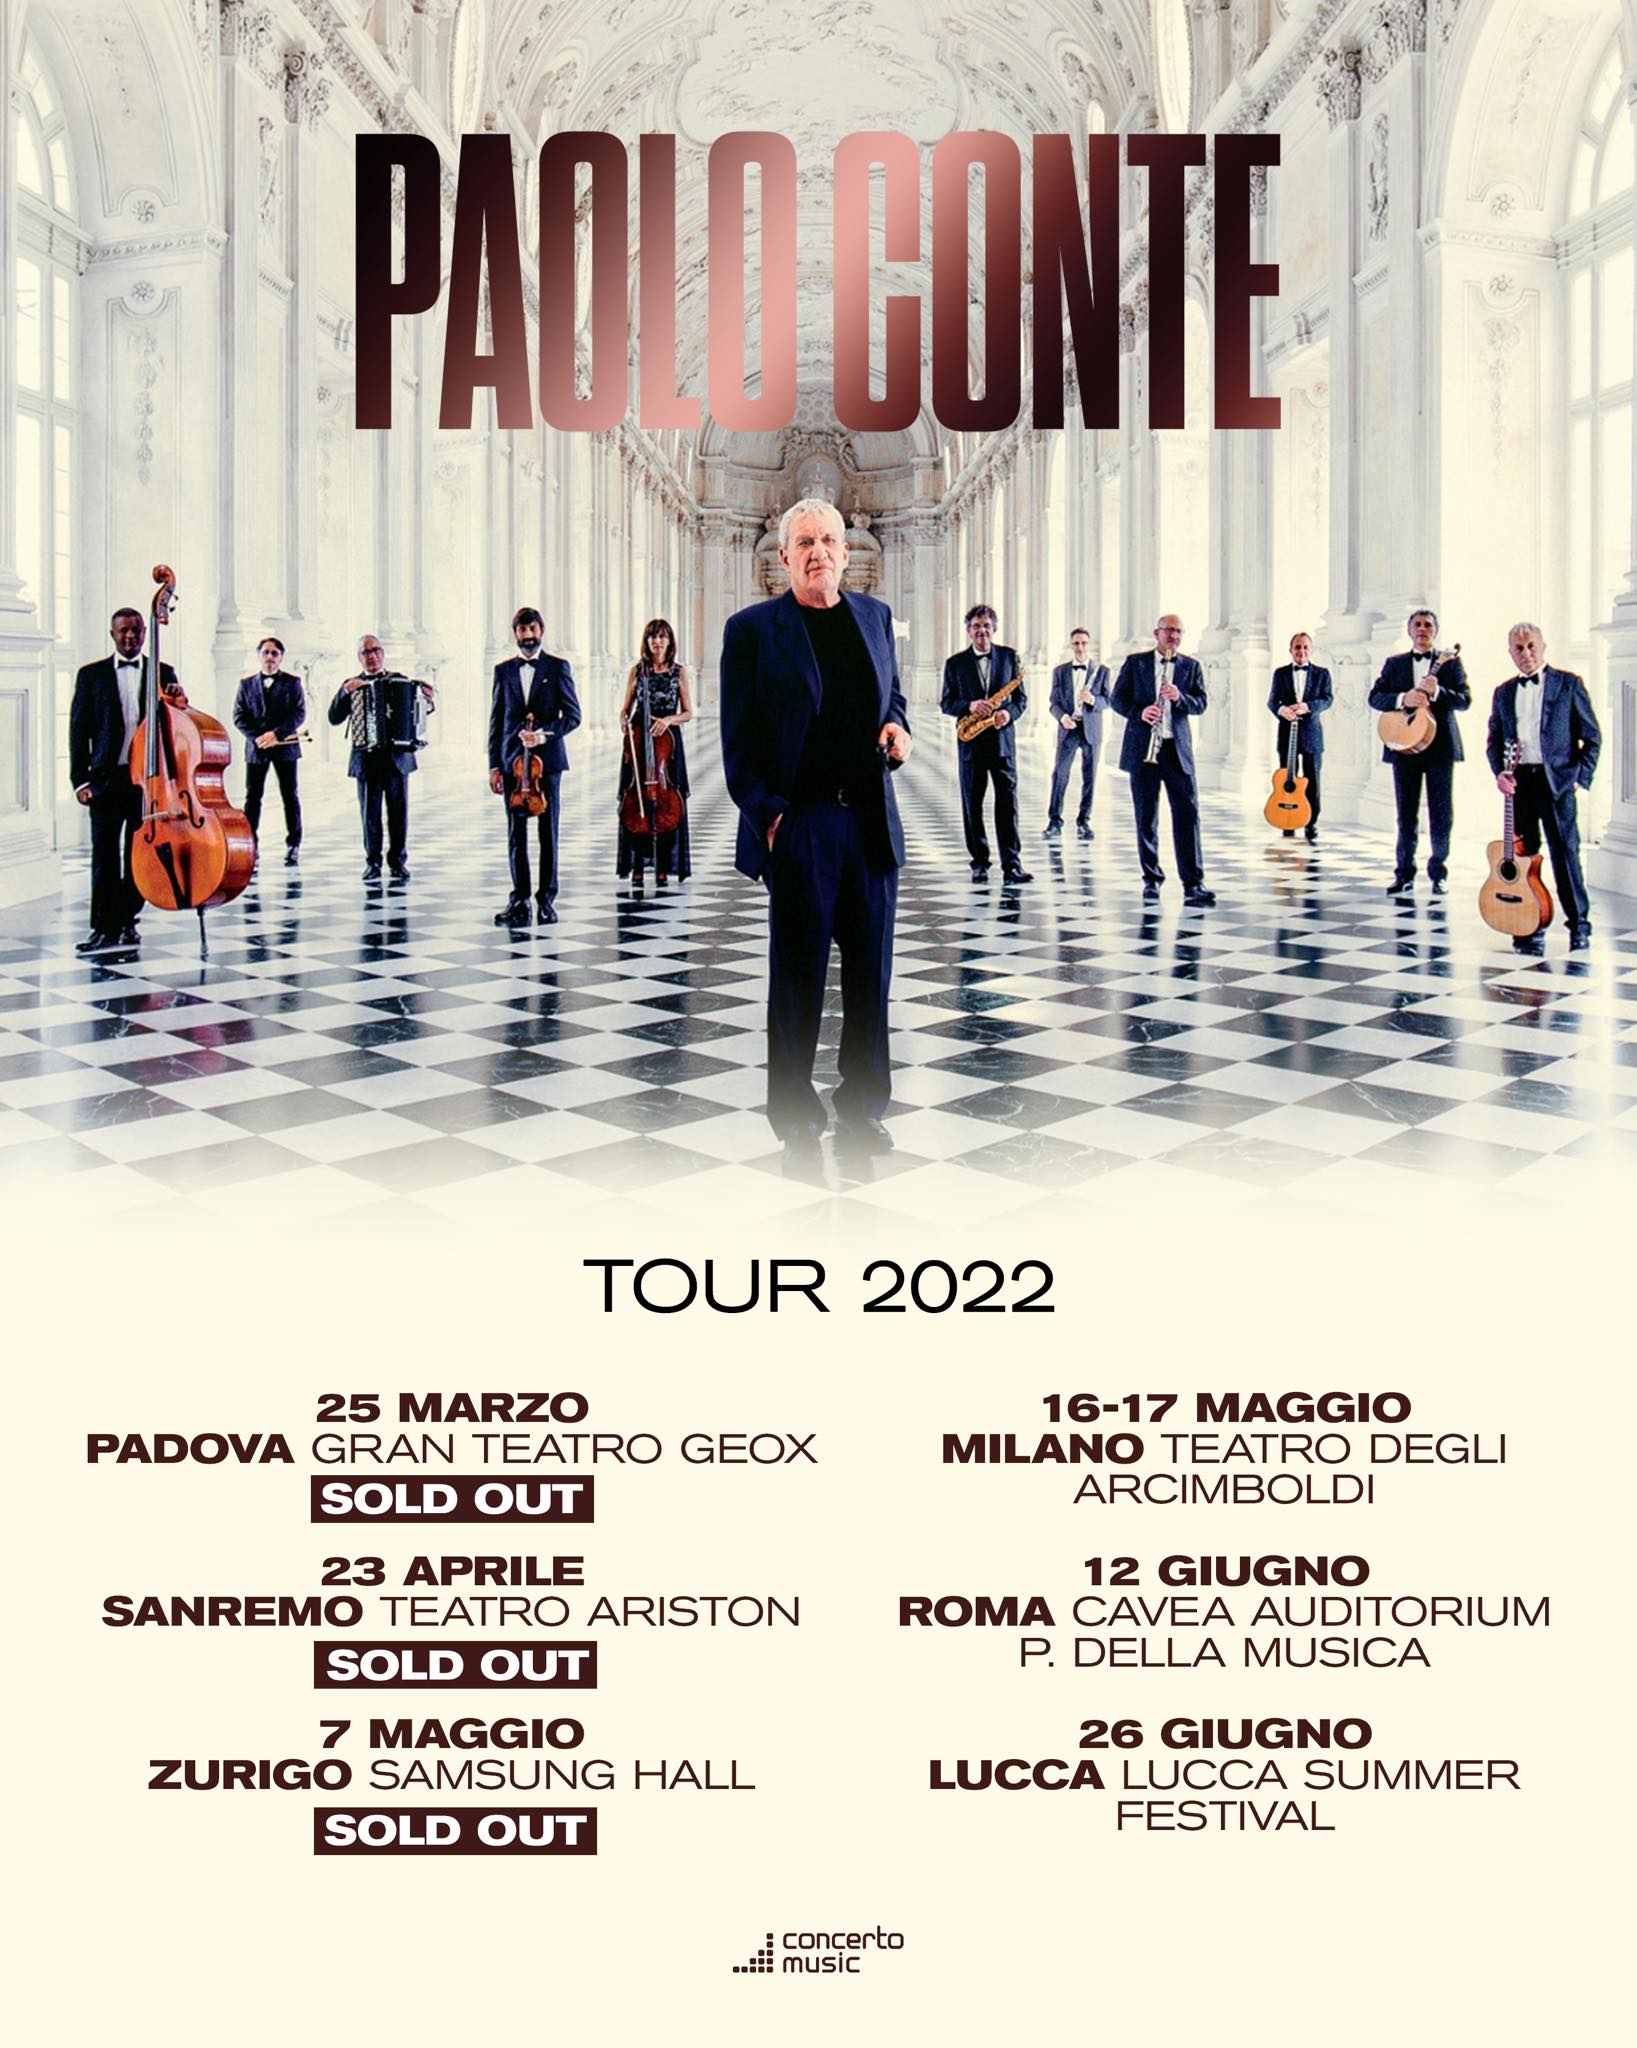 paolo conte tour 2022 deutschland